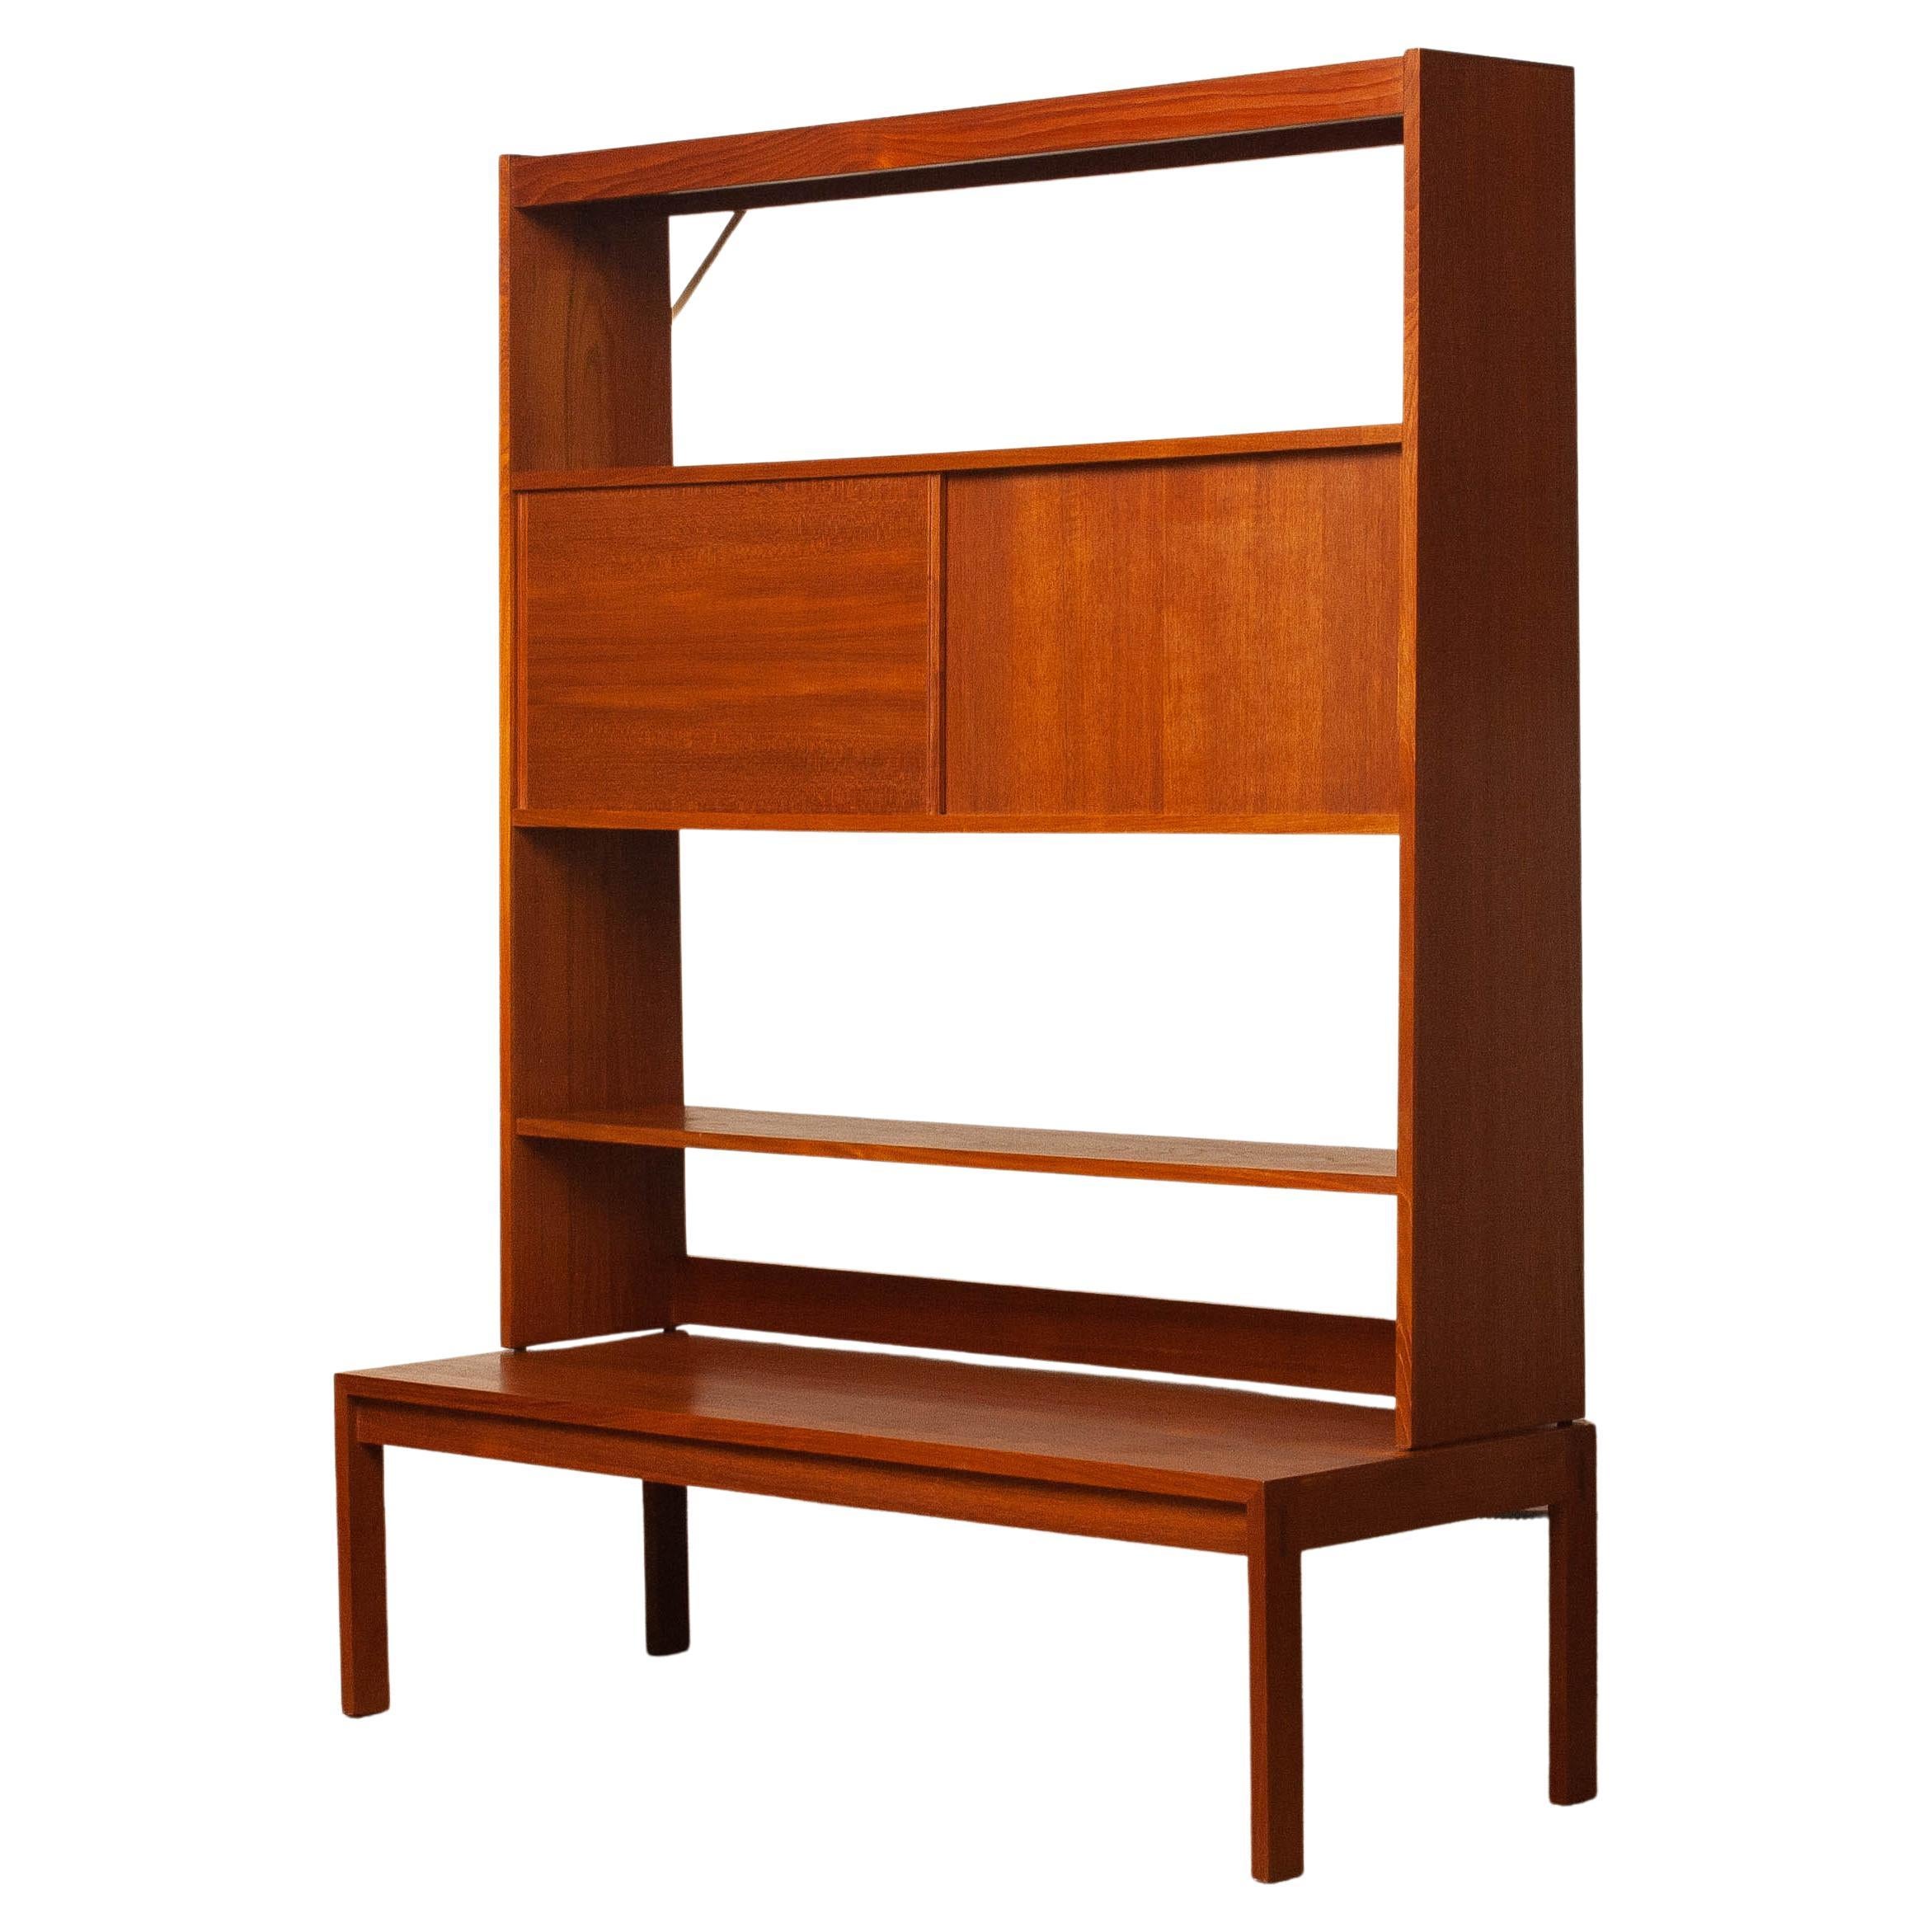 1960s Slim Swedish Bookcase Cabinet in Teak Designed by Svante Skogh for Seffle